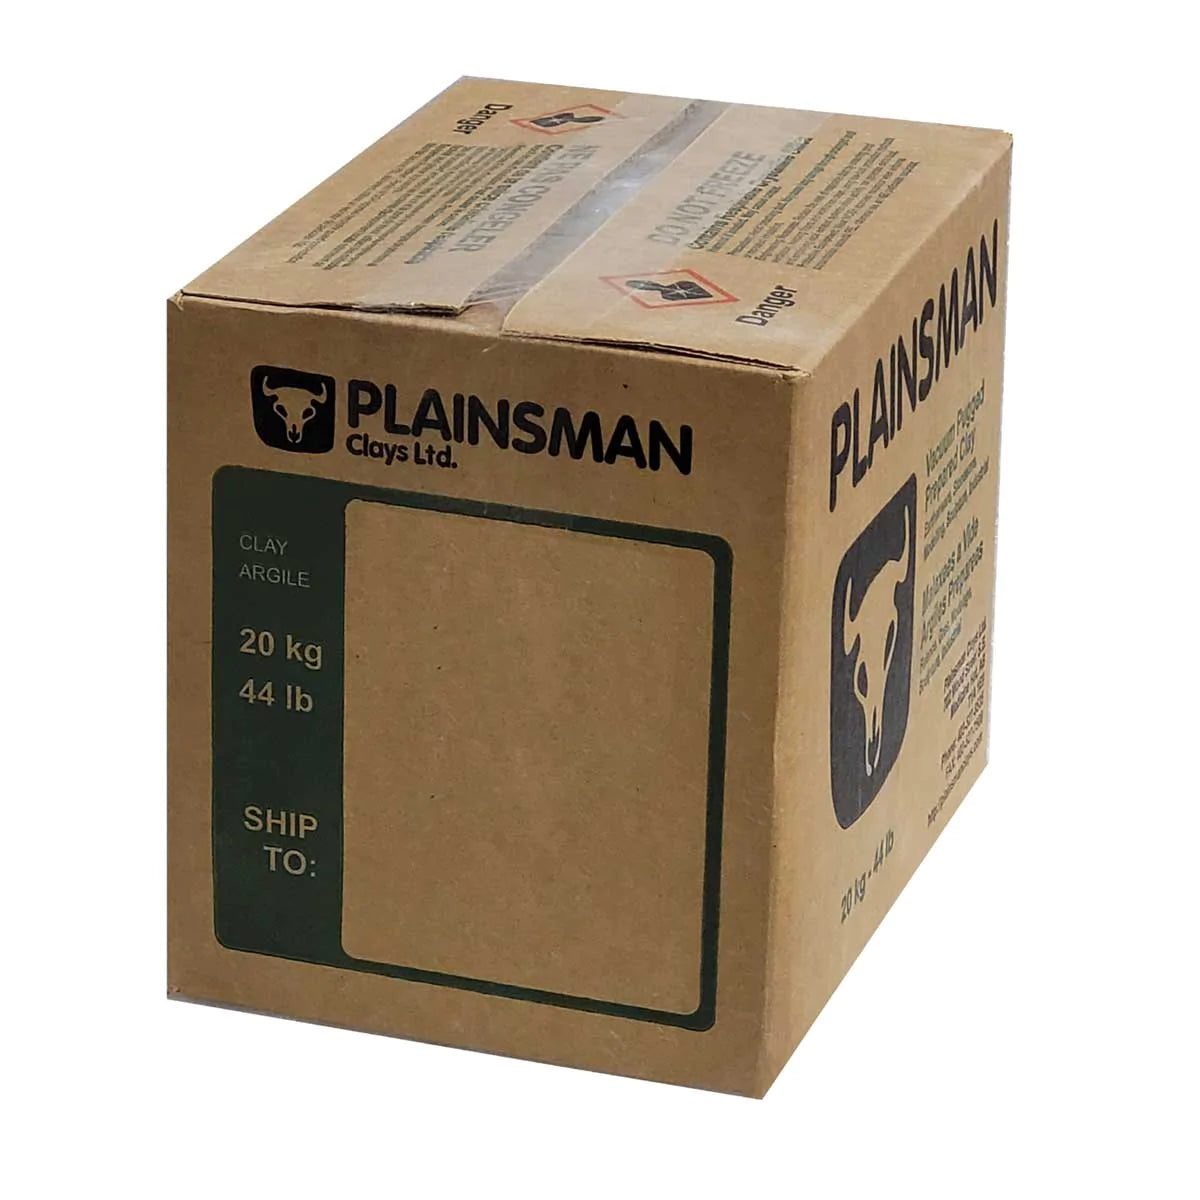 M390 Plainsman Clay, 20 kg